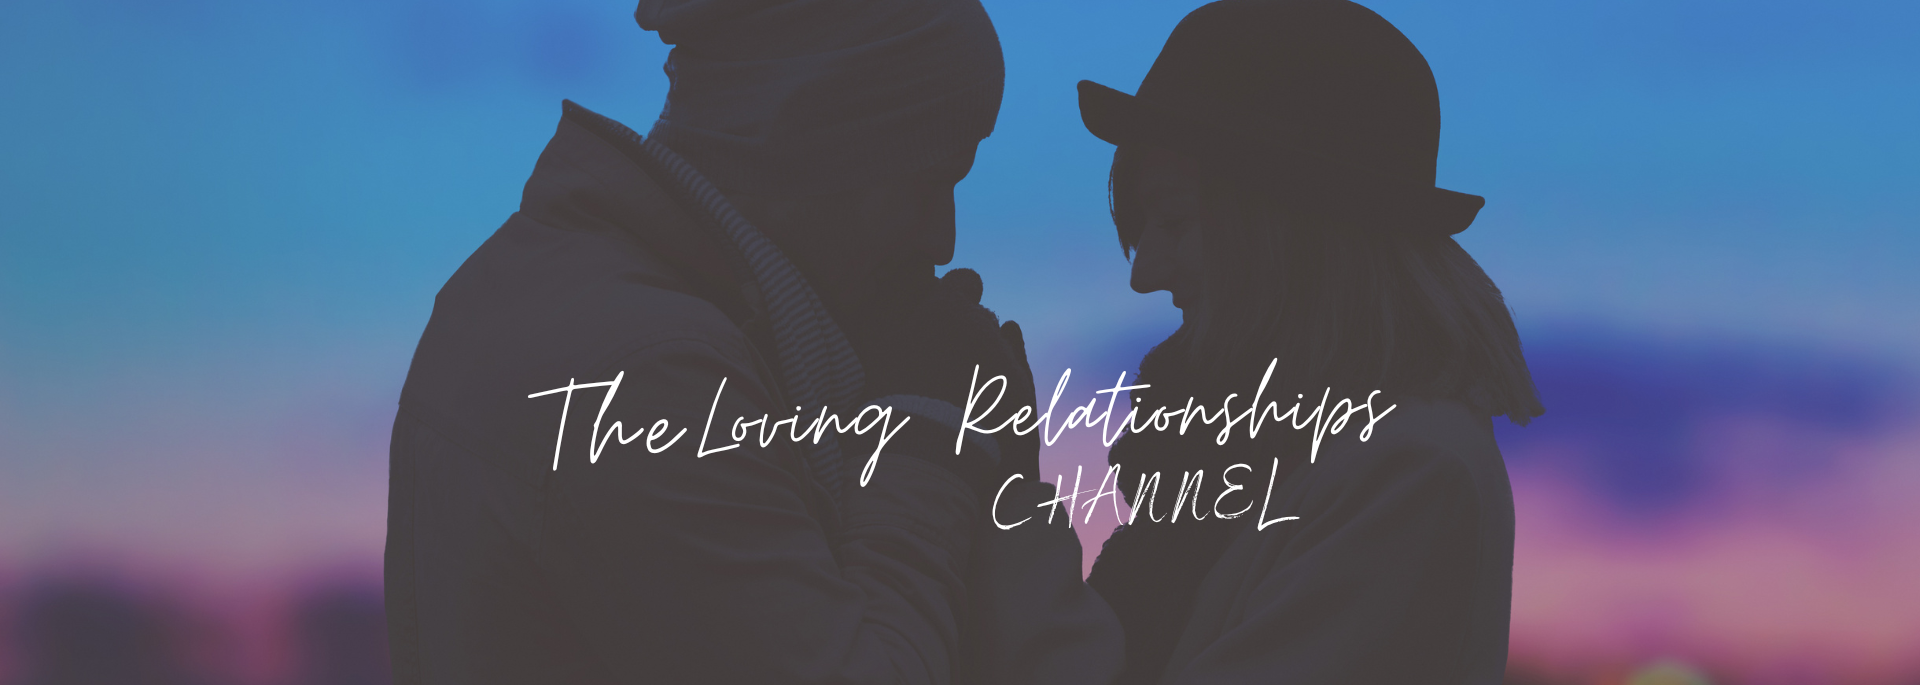 Loving Relationships Channel channel